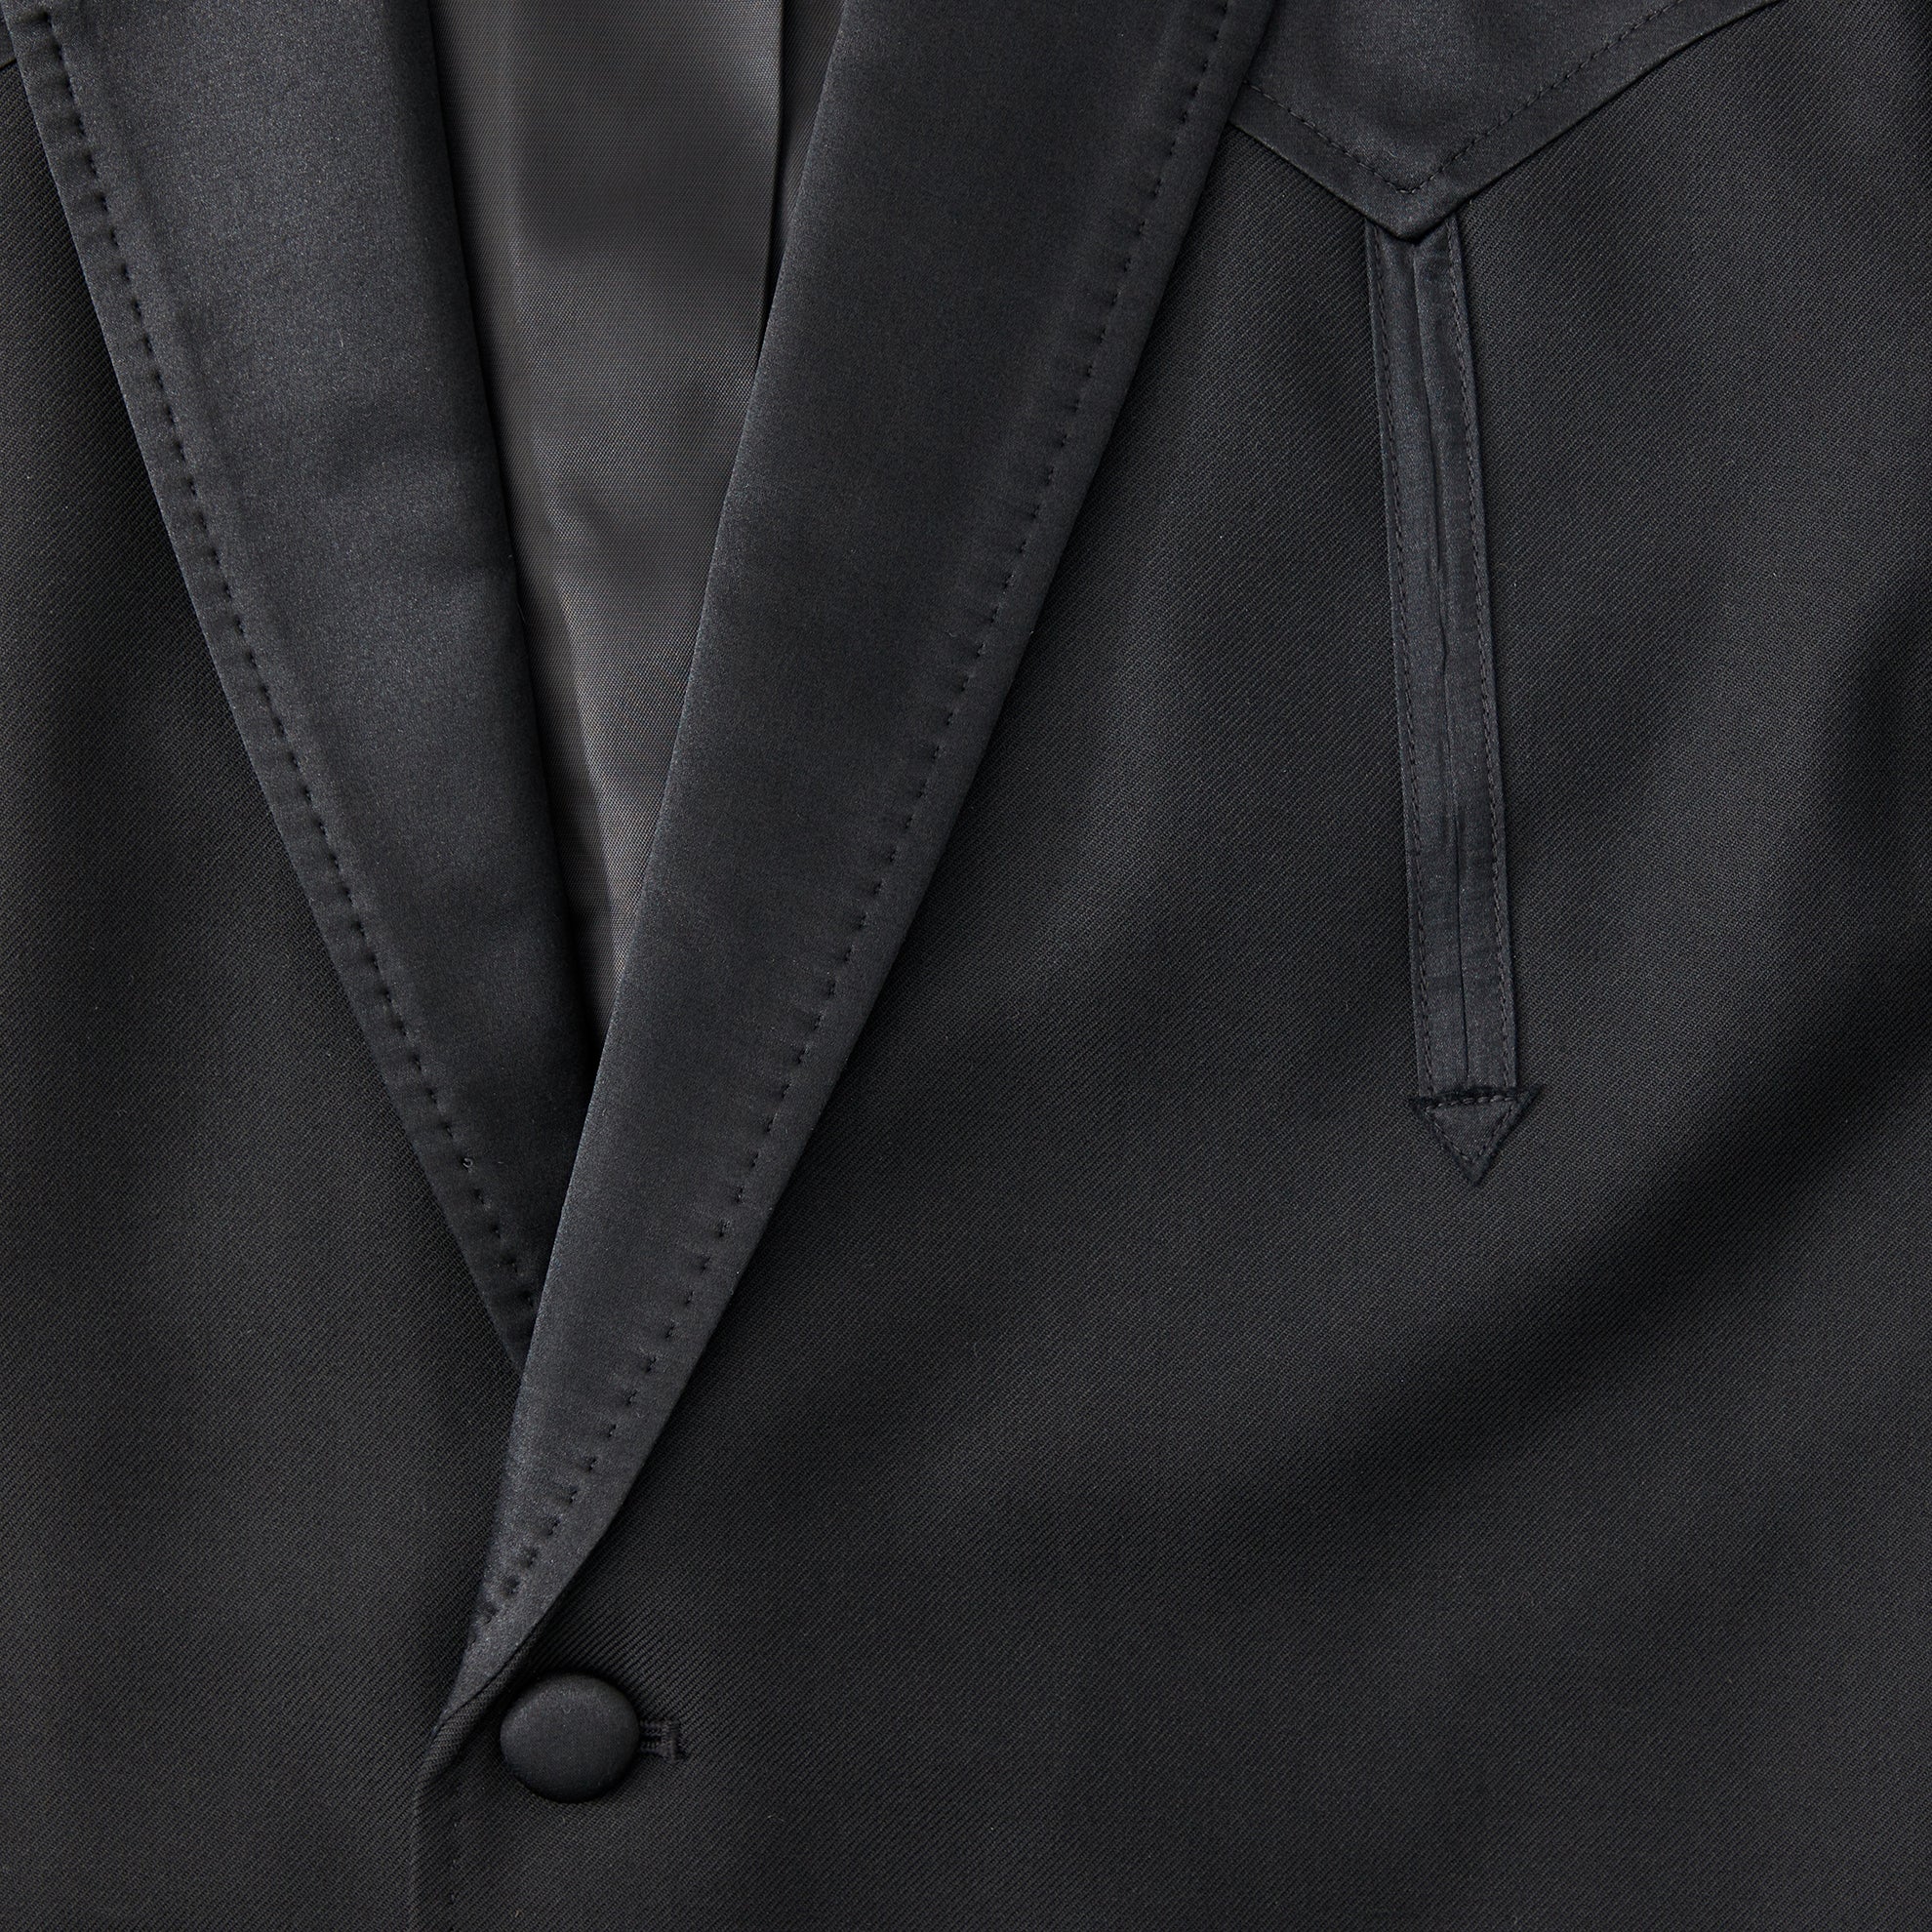 Western Tuxedo Jacket – The J. Peterman Company